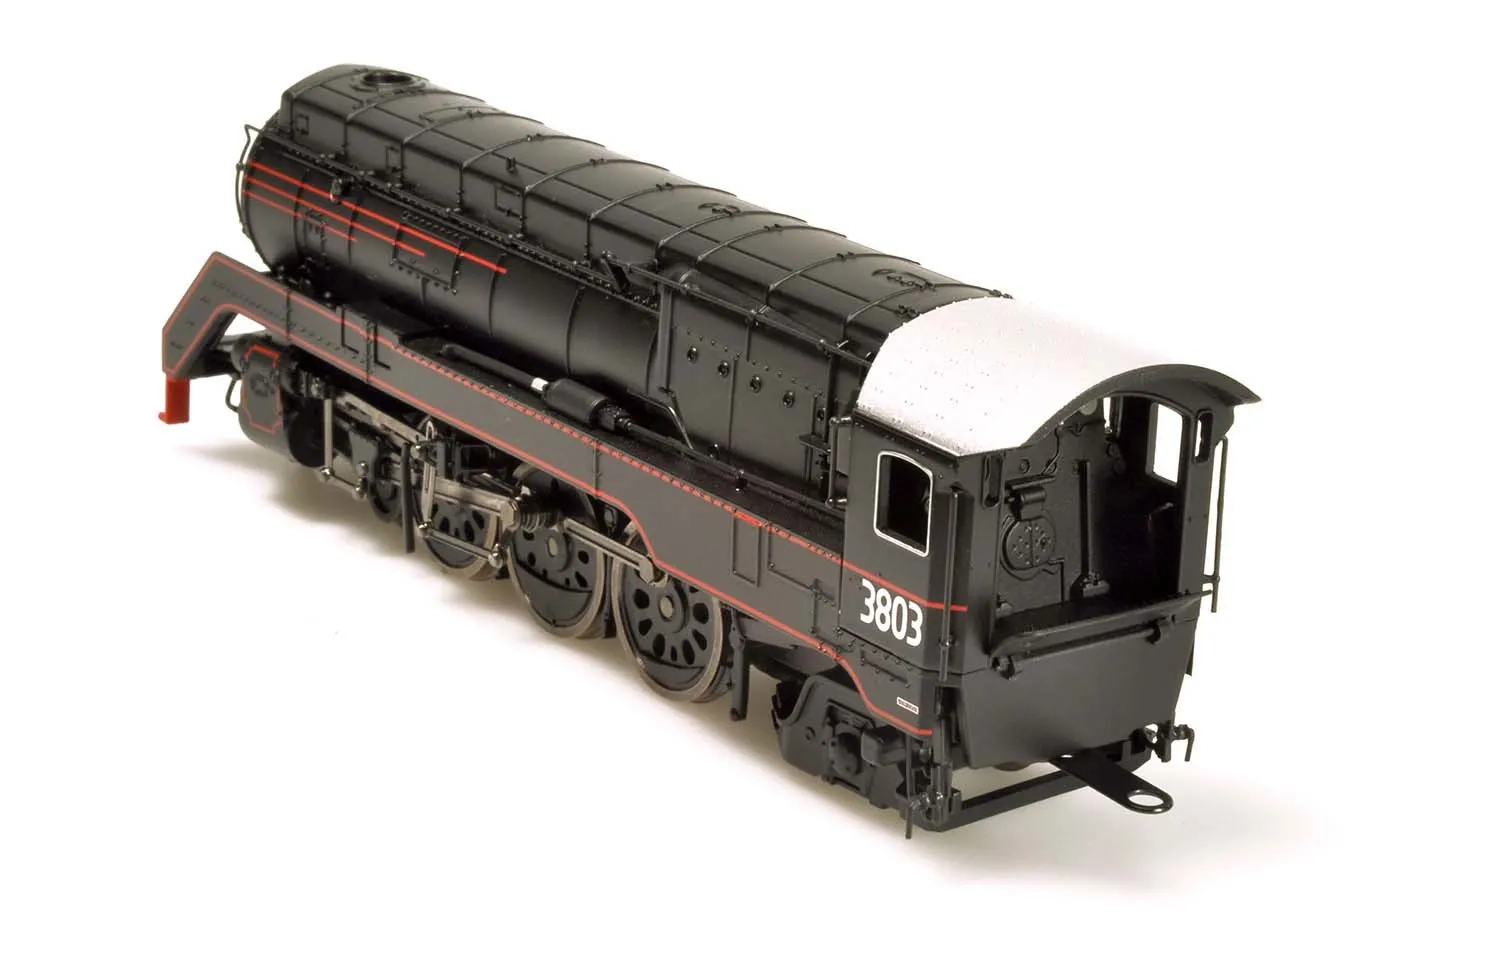 NSW, Dampflokomotive C38 in schwarz/roter Lackierung, Ep. III